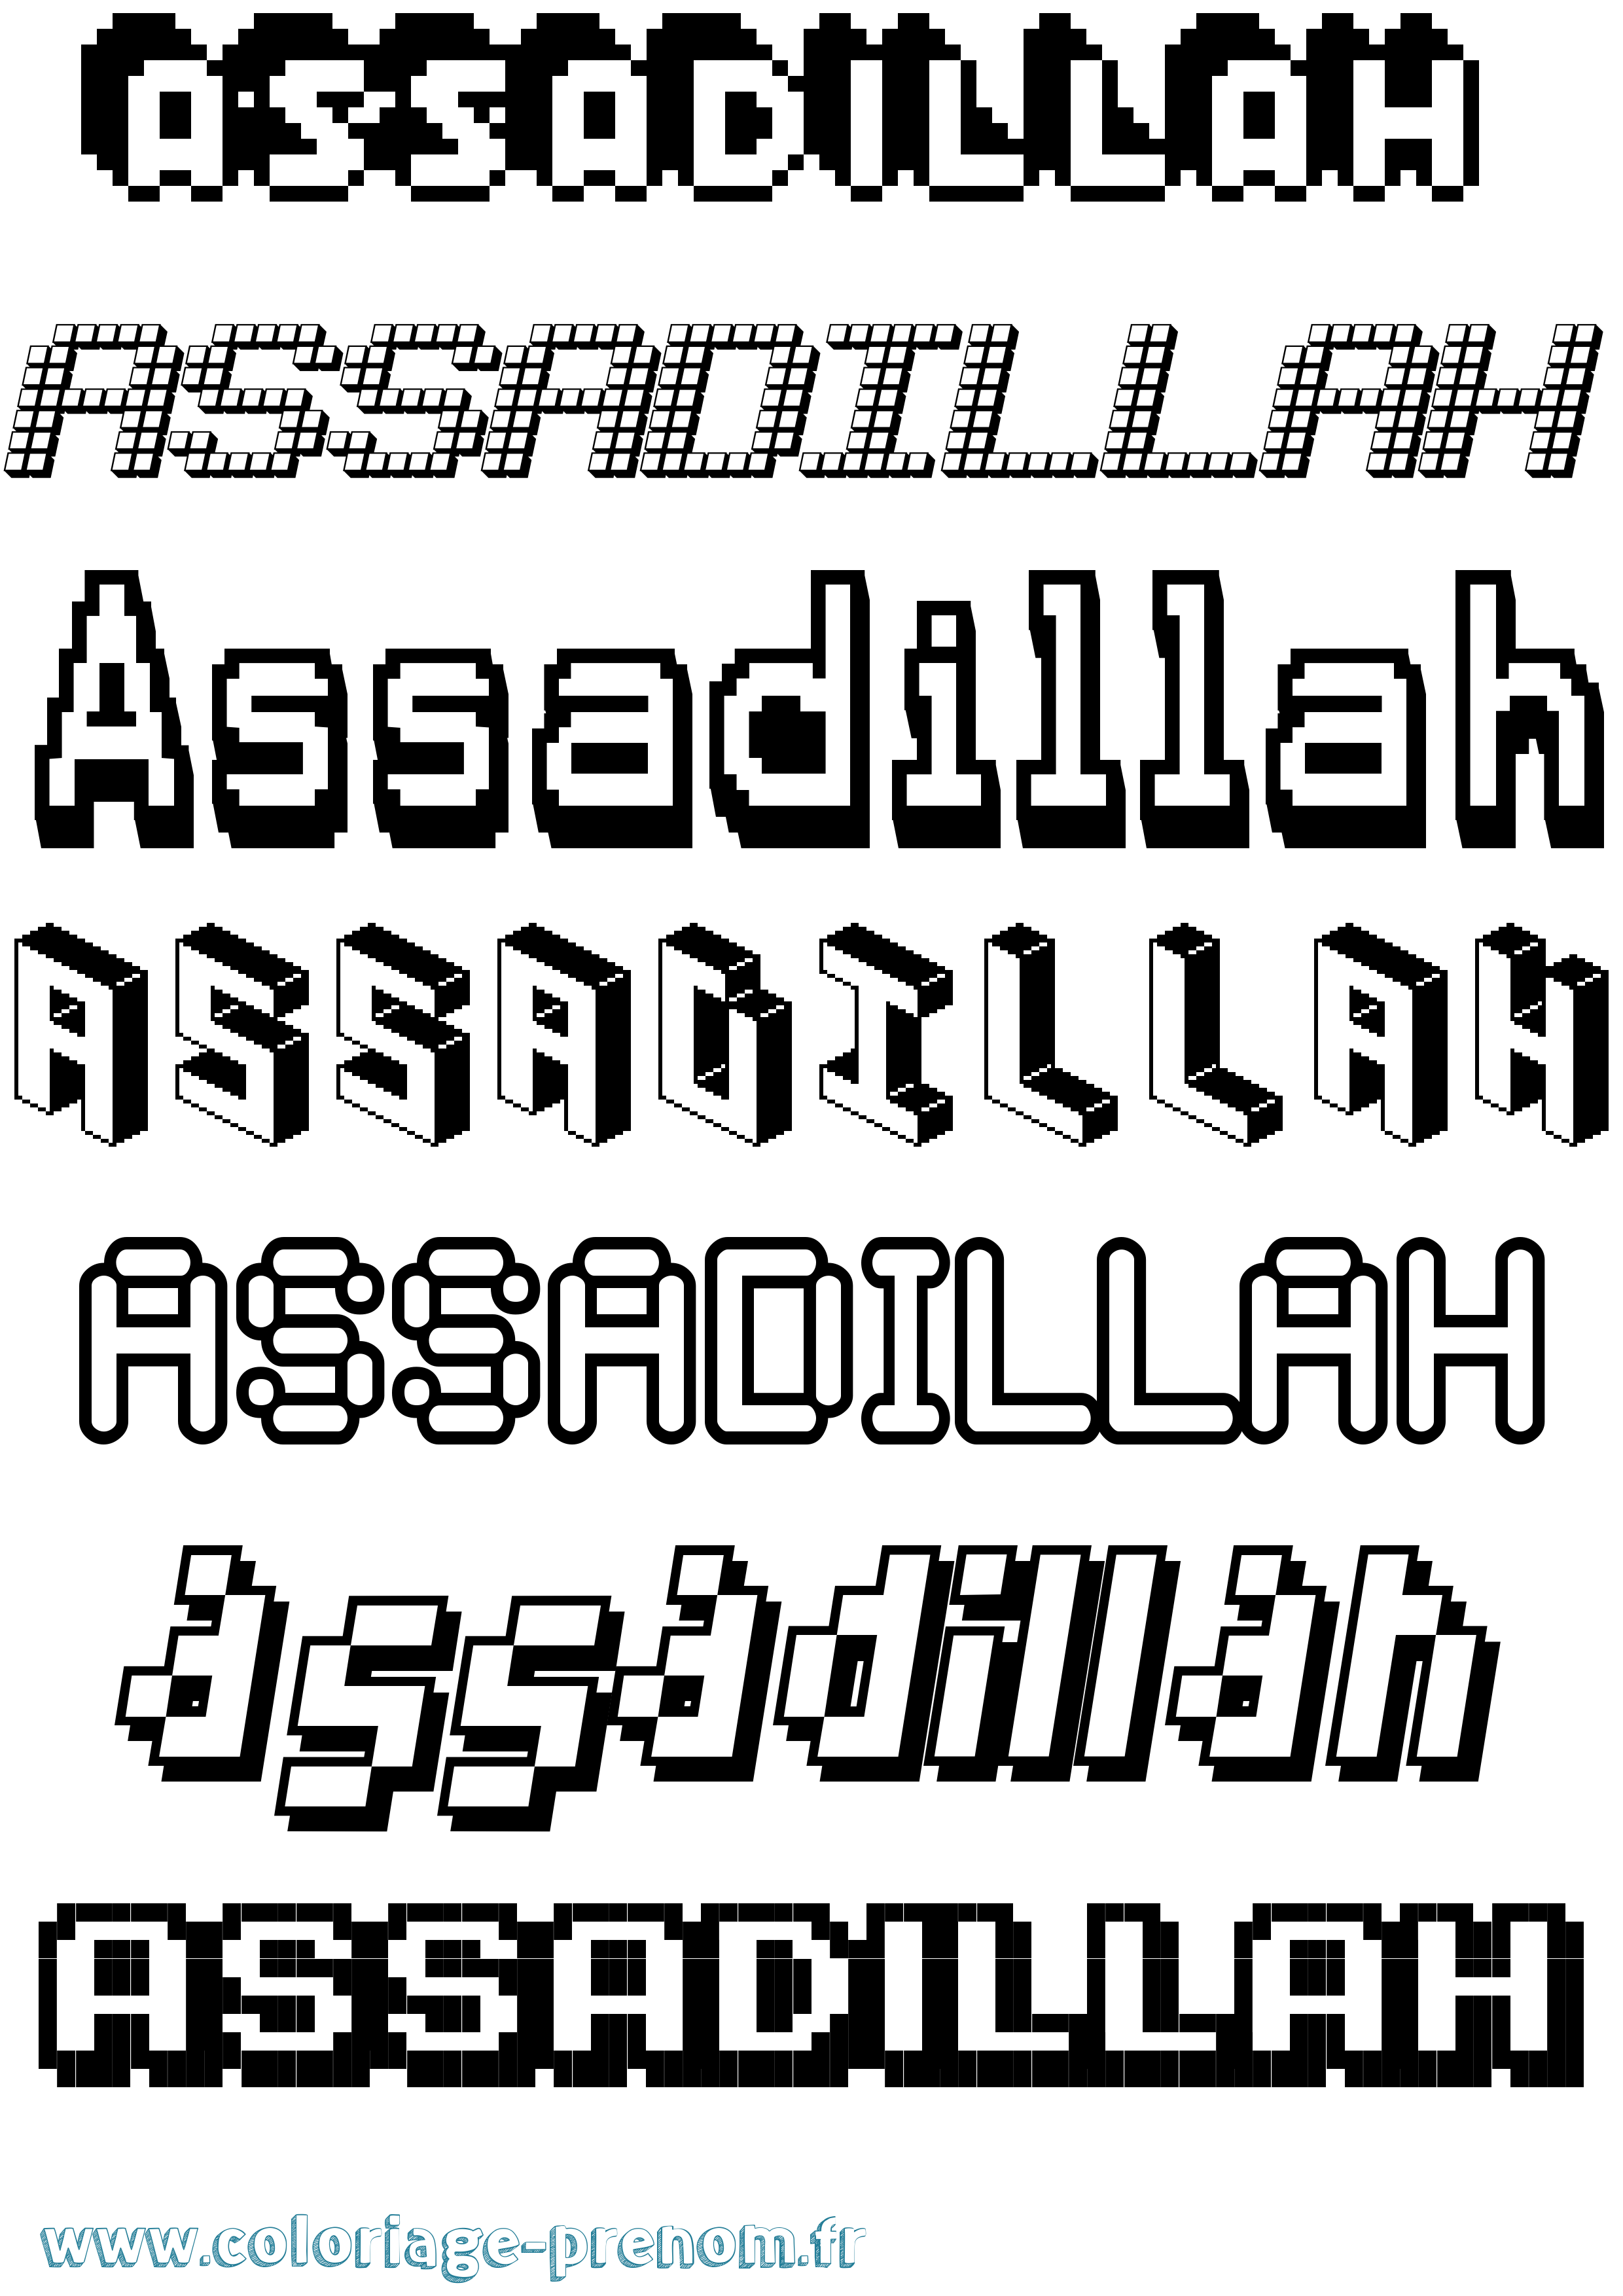 Coloriage prénom Assadillah Pixel